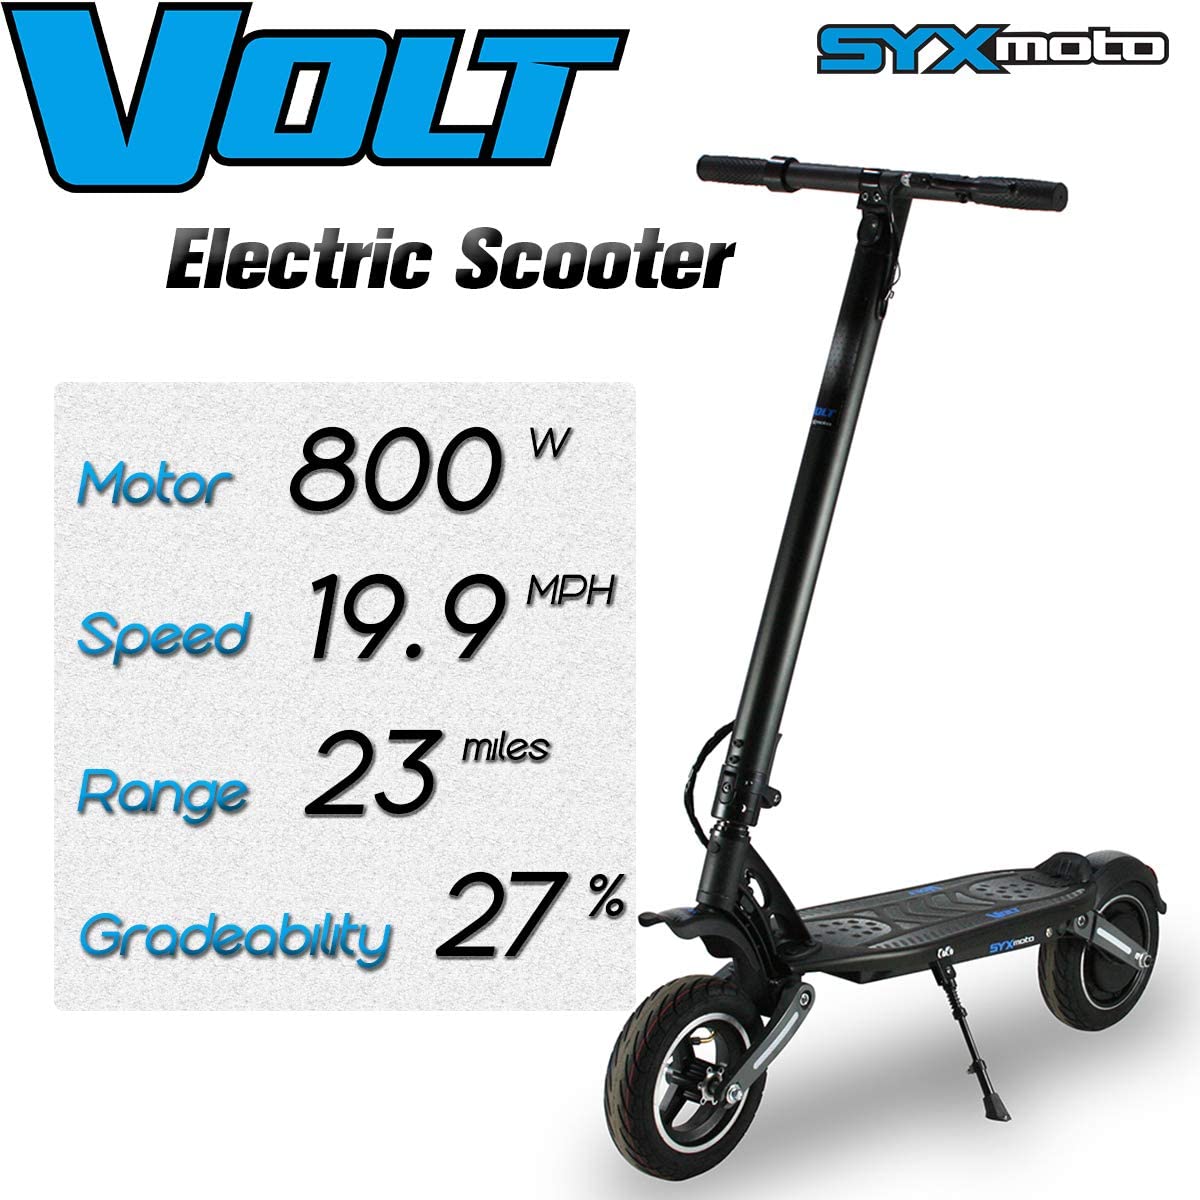 SYX MOTO Volt Foldable Electric Kick Scooter - SYX MOTO